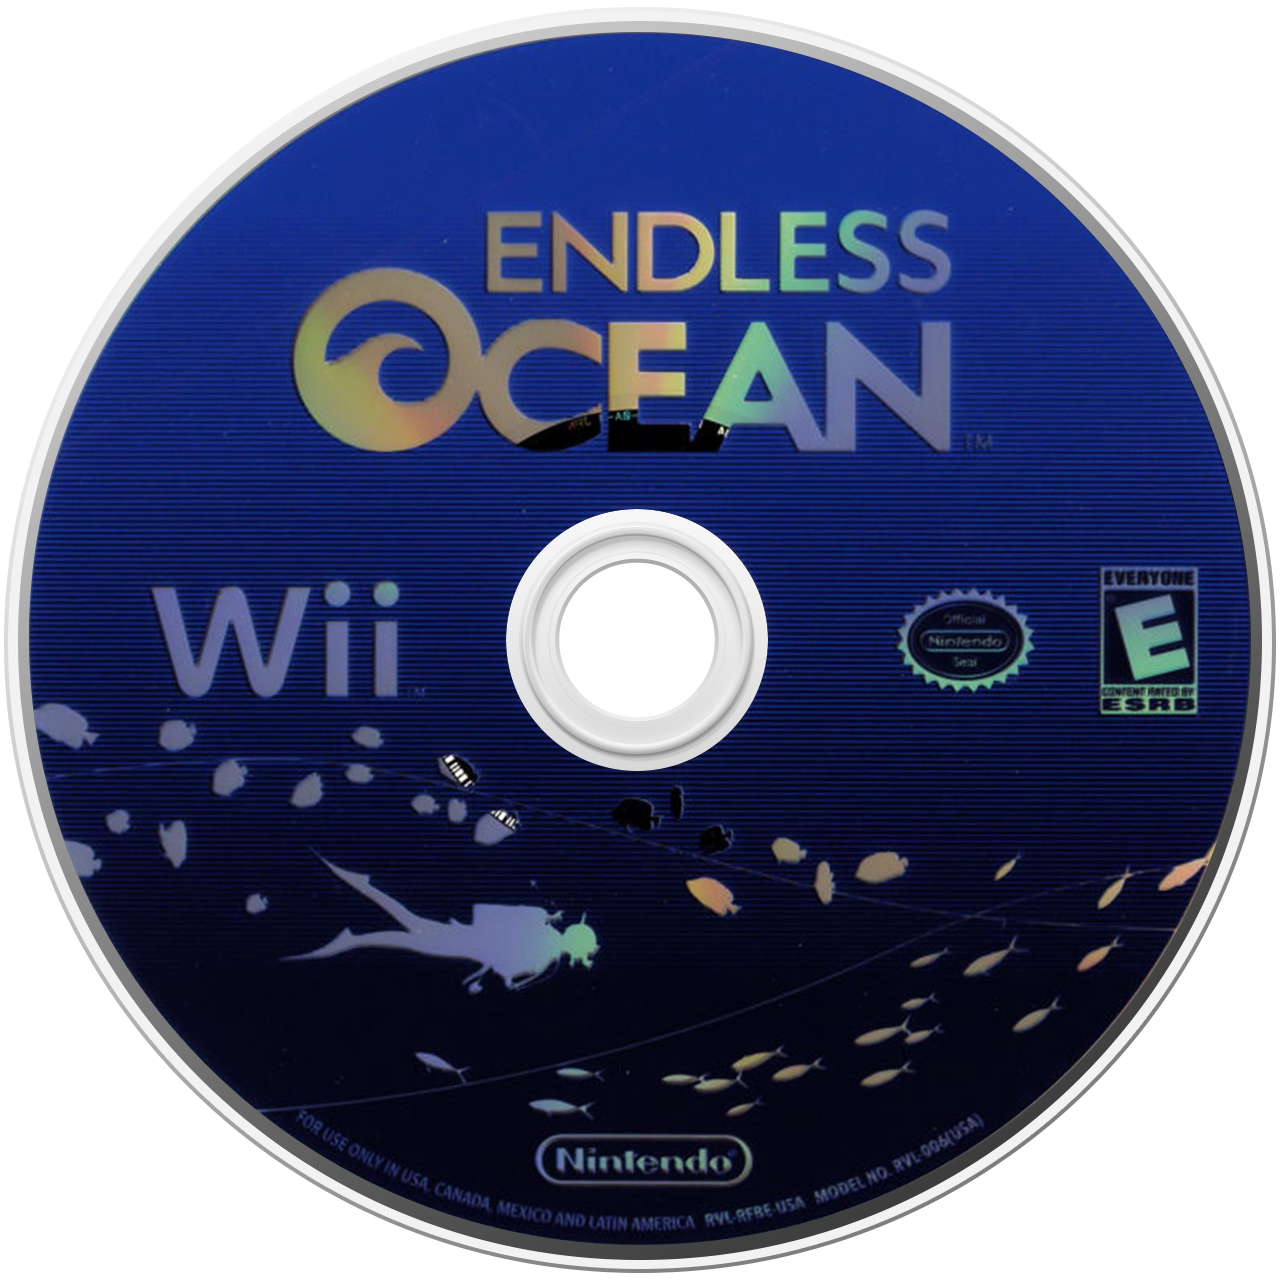 Endless Ocean - Nintendo Wii Game